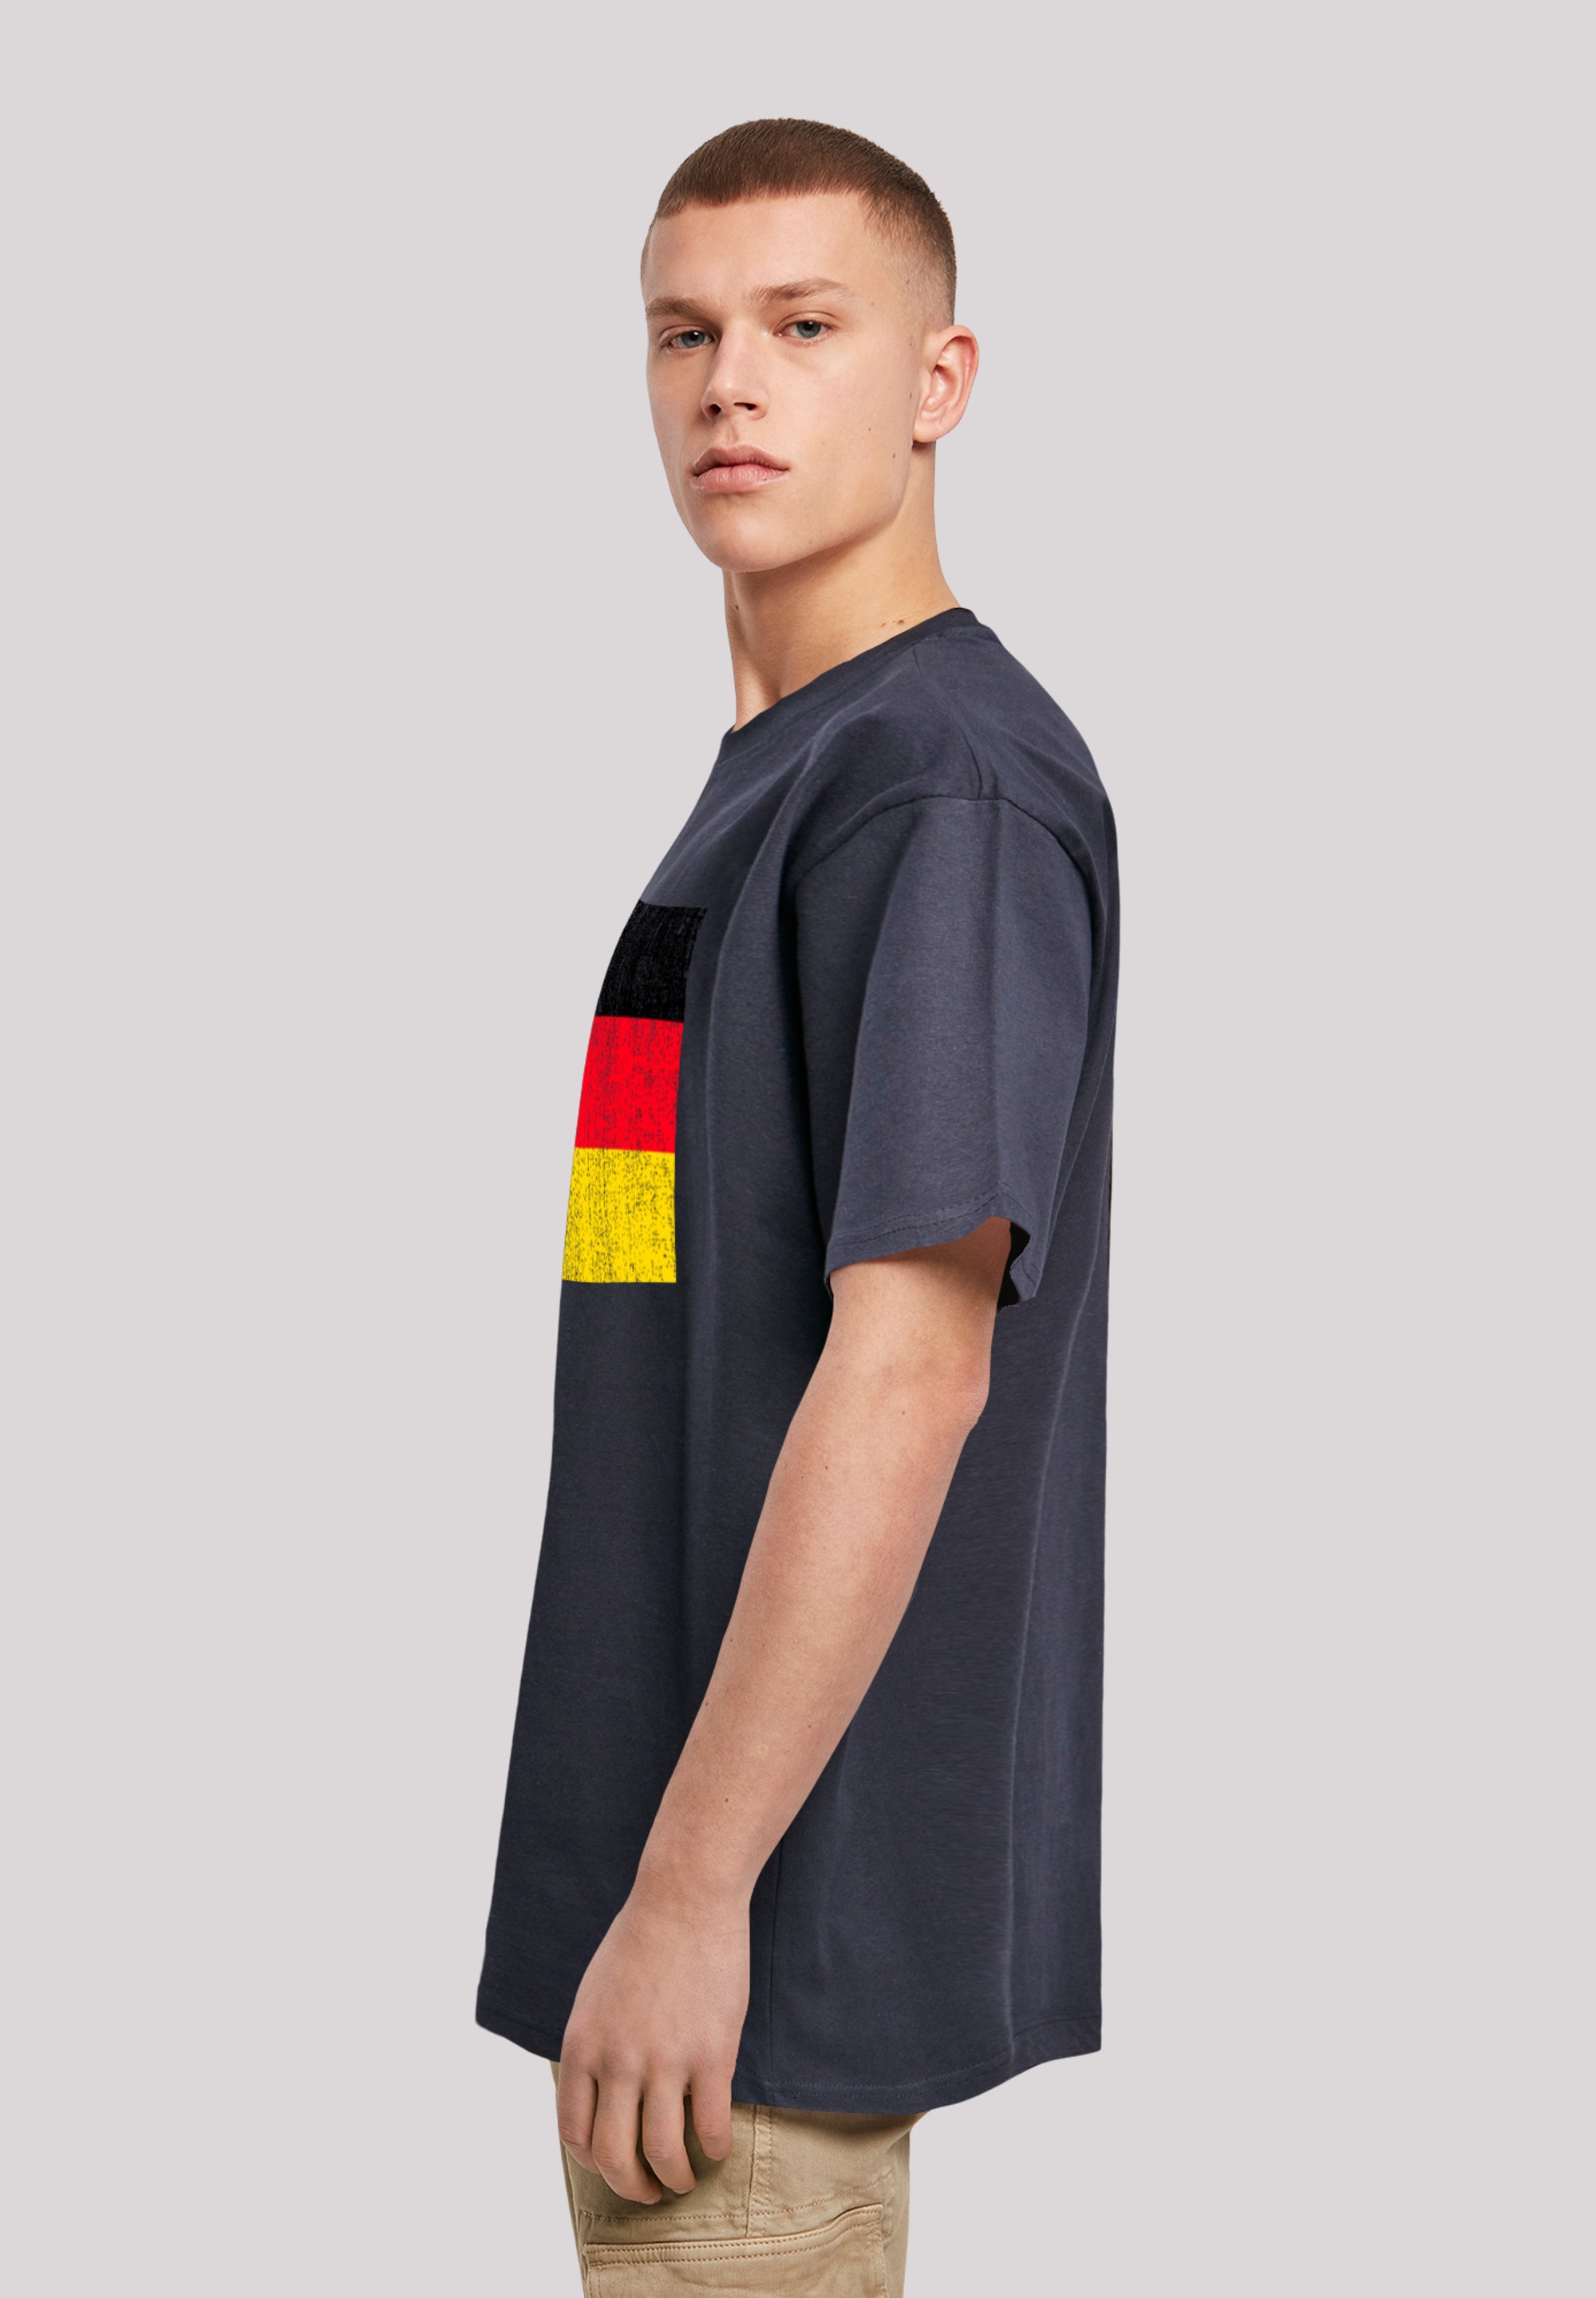 F4NT4STIC T-Shirt »Germany Deutschland Flagge distressed«, Print